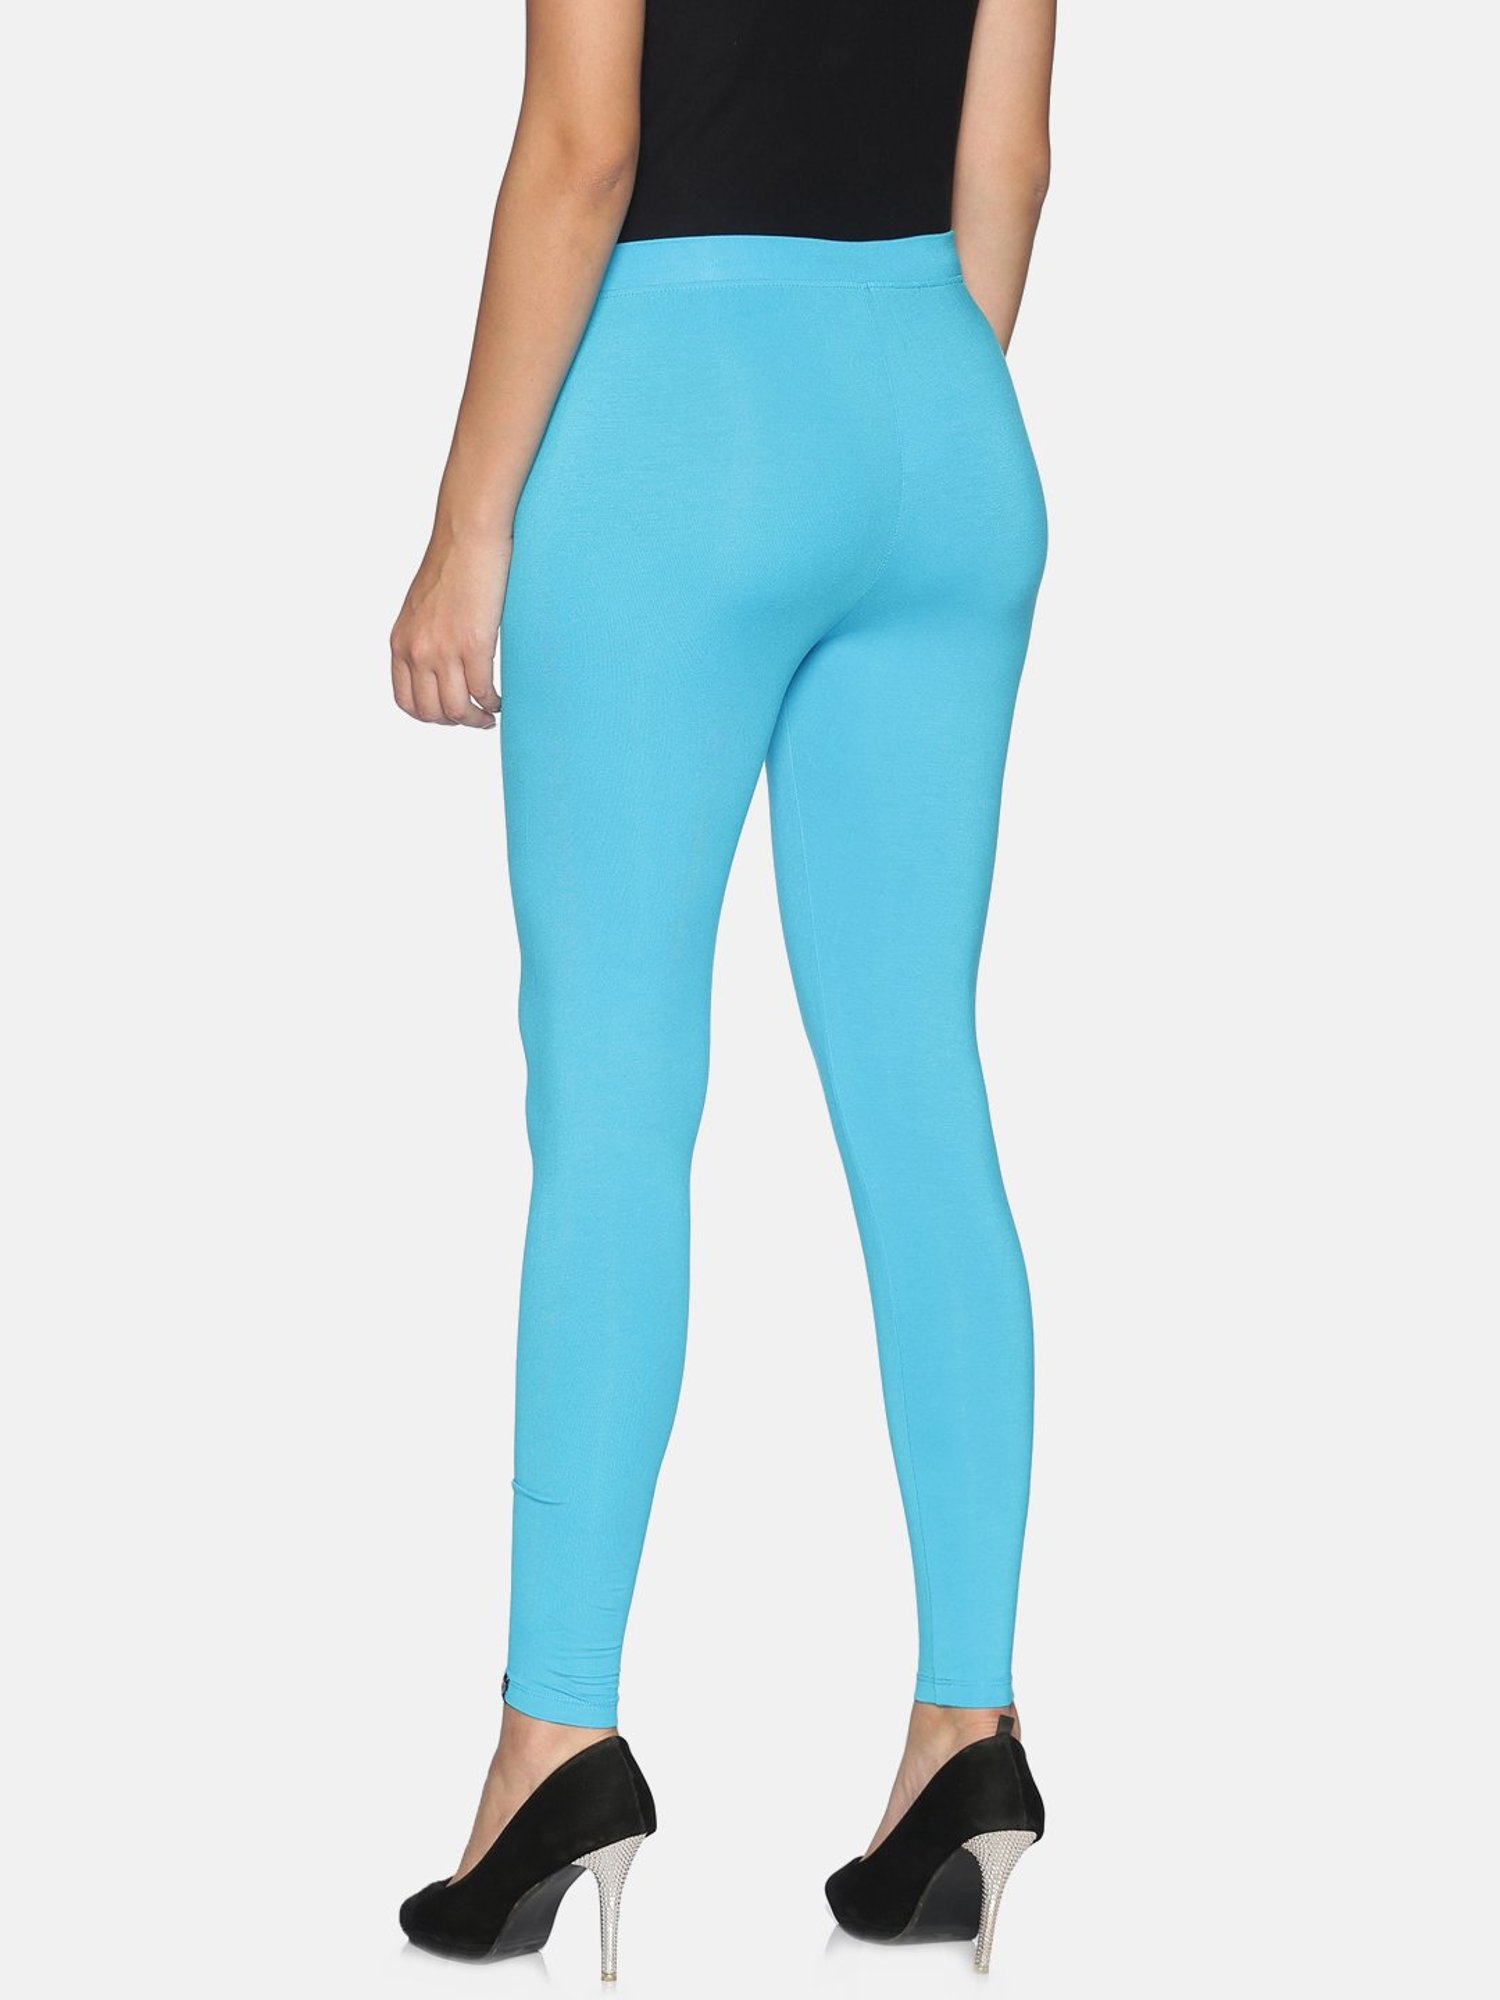 Buy Turquoise Blue Leggings for Women by LAKSHITA Online | Ajio.com